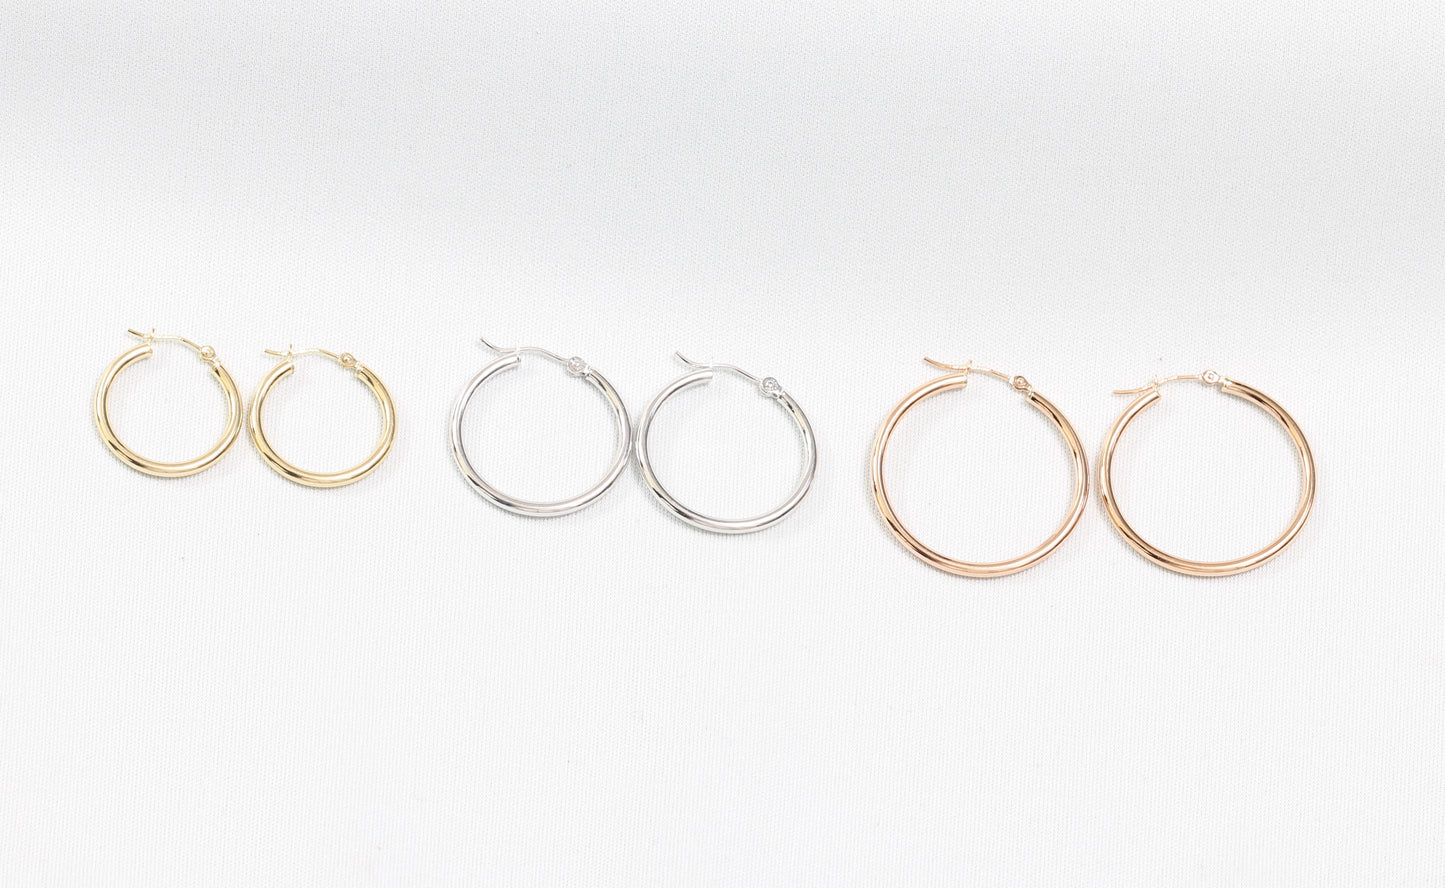 14k hoops earrings in yellow, white, & rose gold